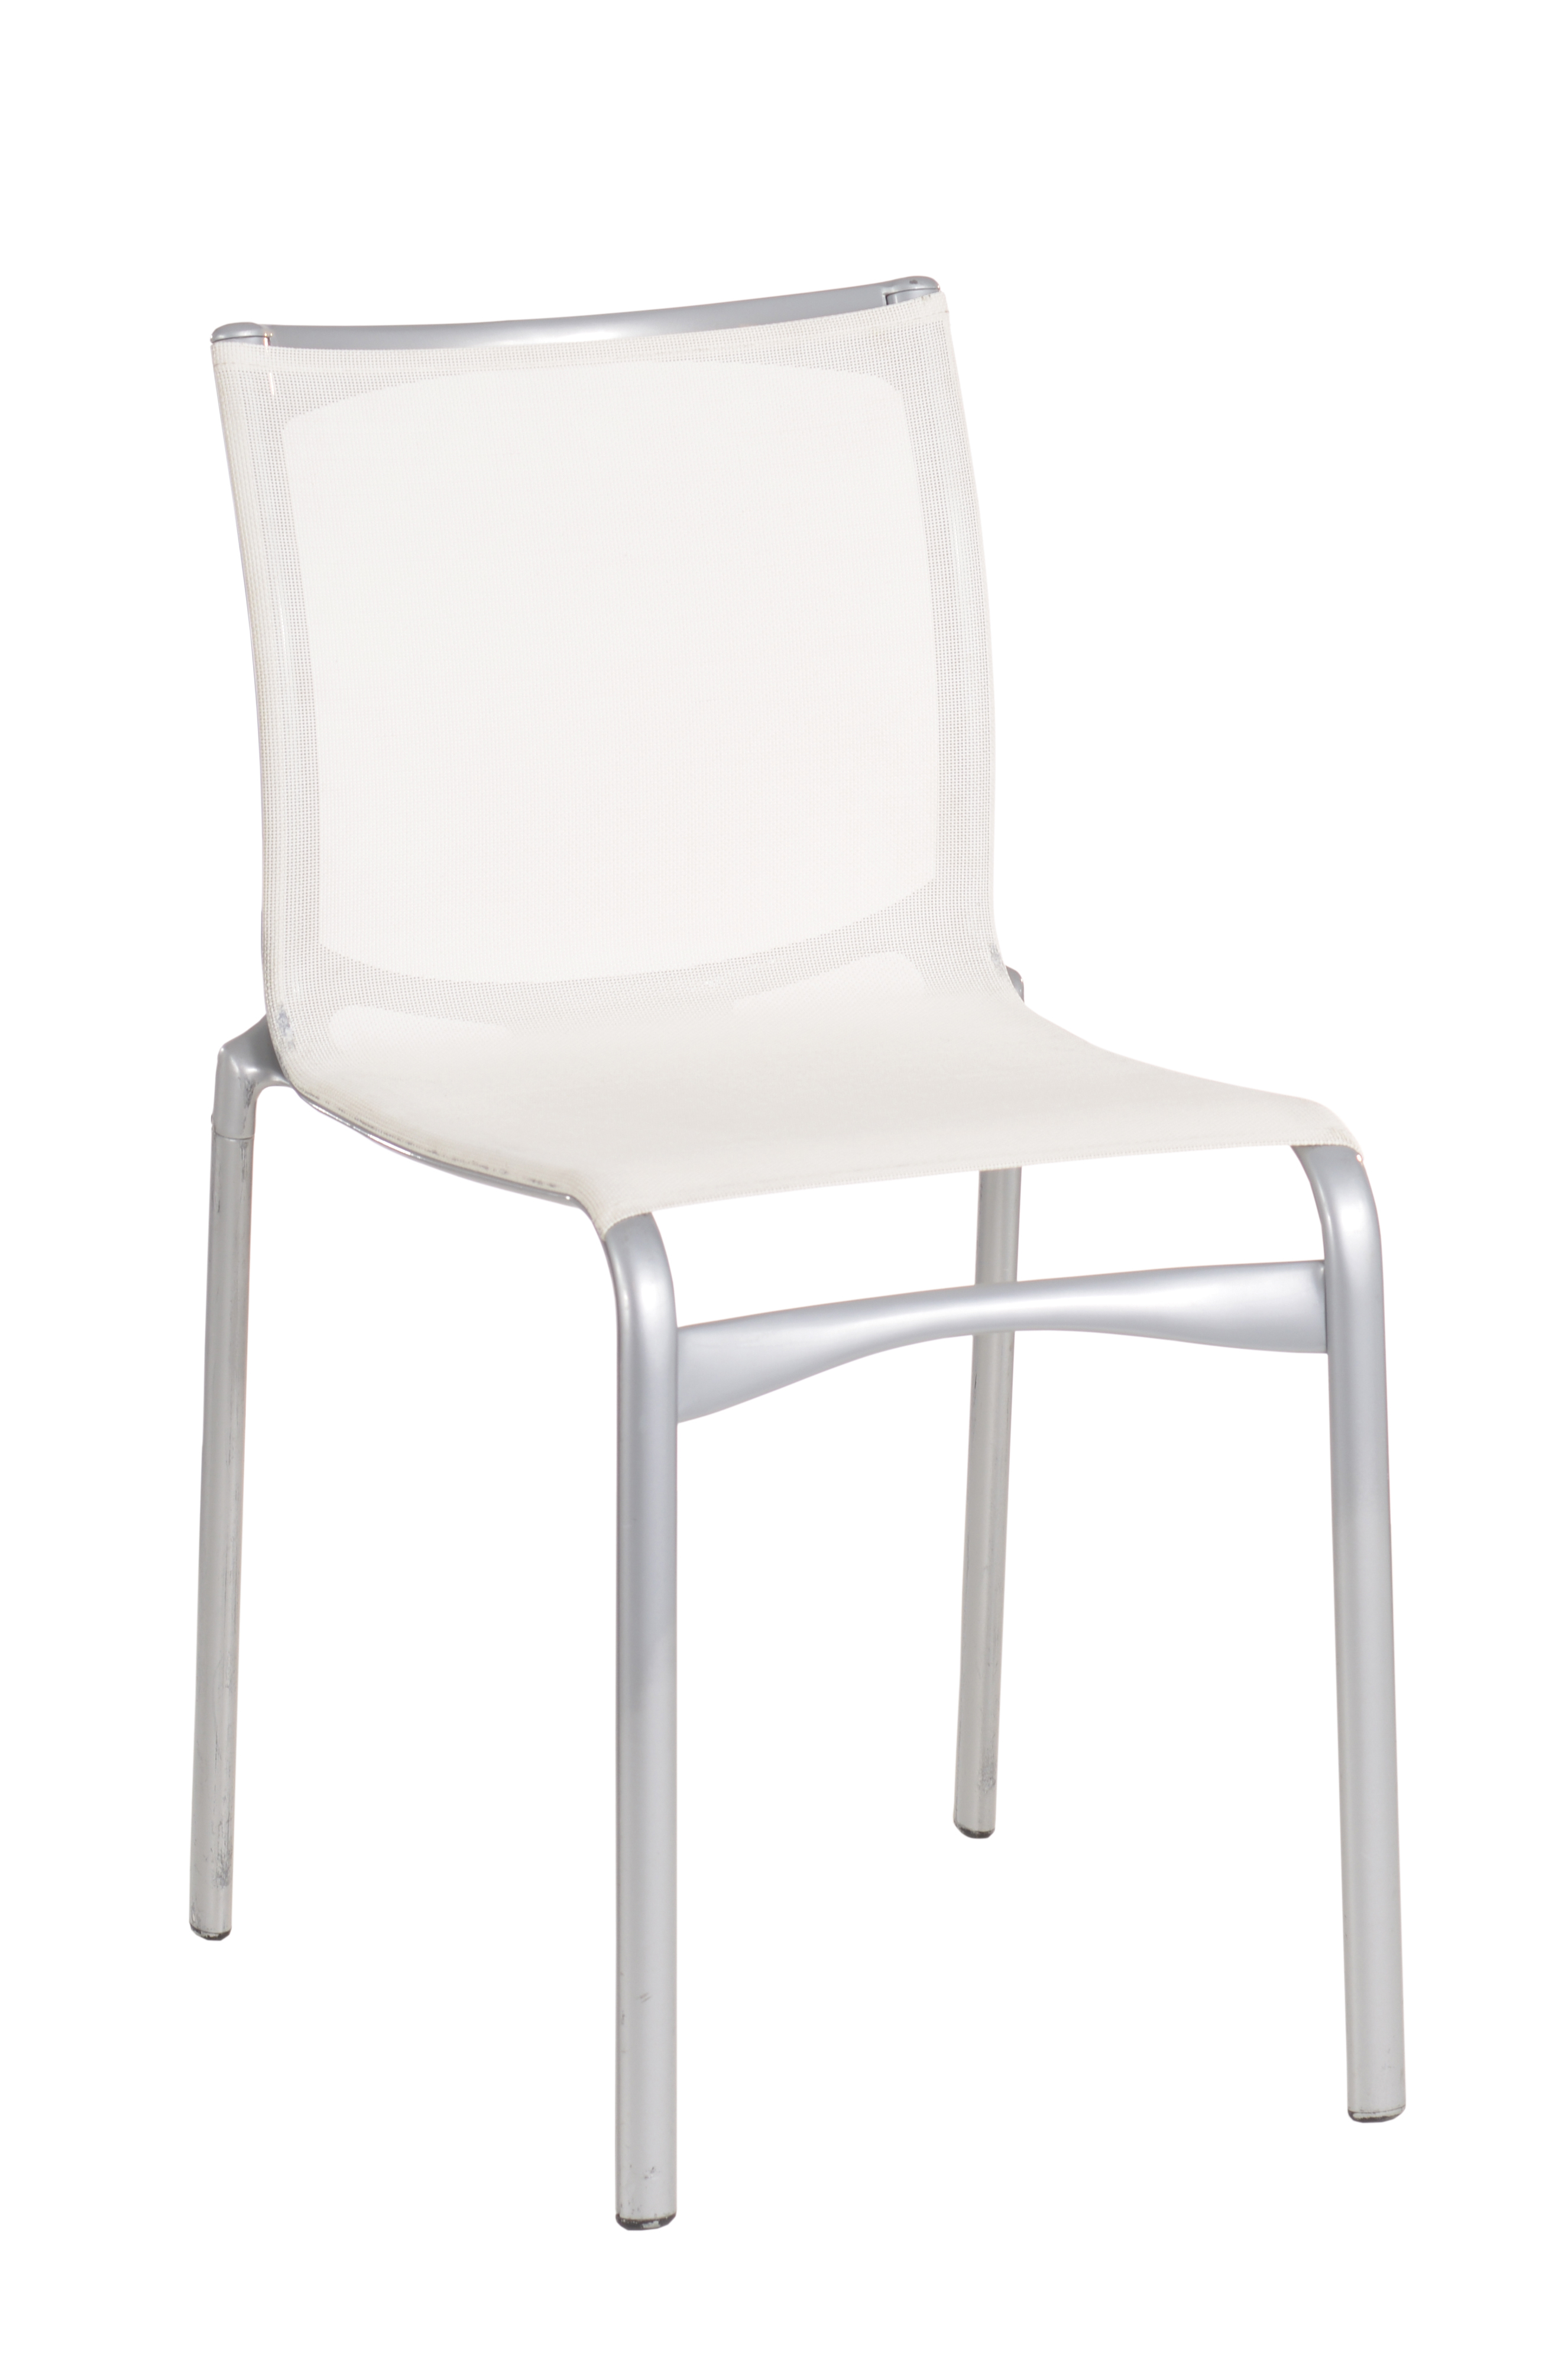 Design-Stuhl Highframe 40/416 (Indoor, Outdoor, Alias - Netzstuhl, stapelbar) - MEGA-reduziert!